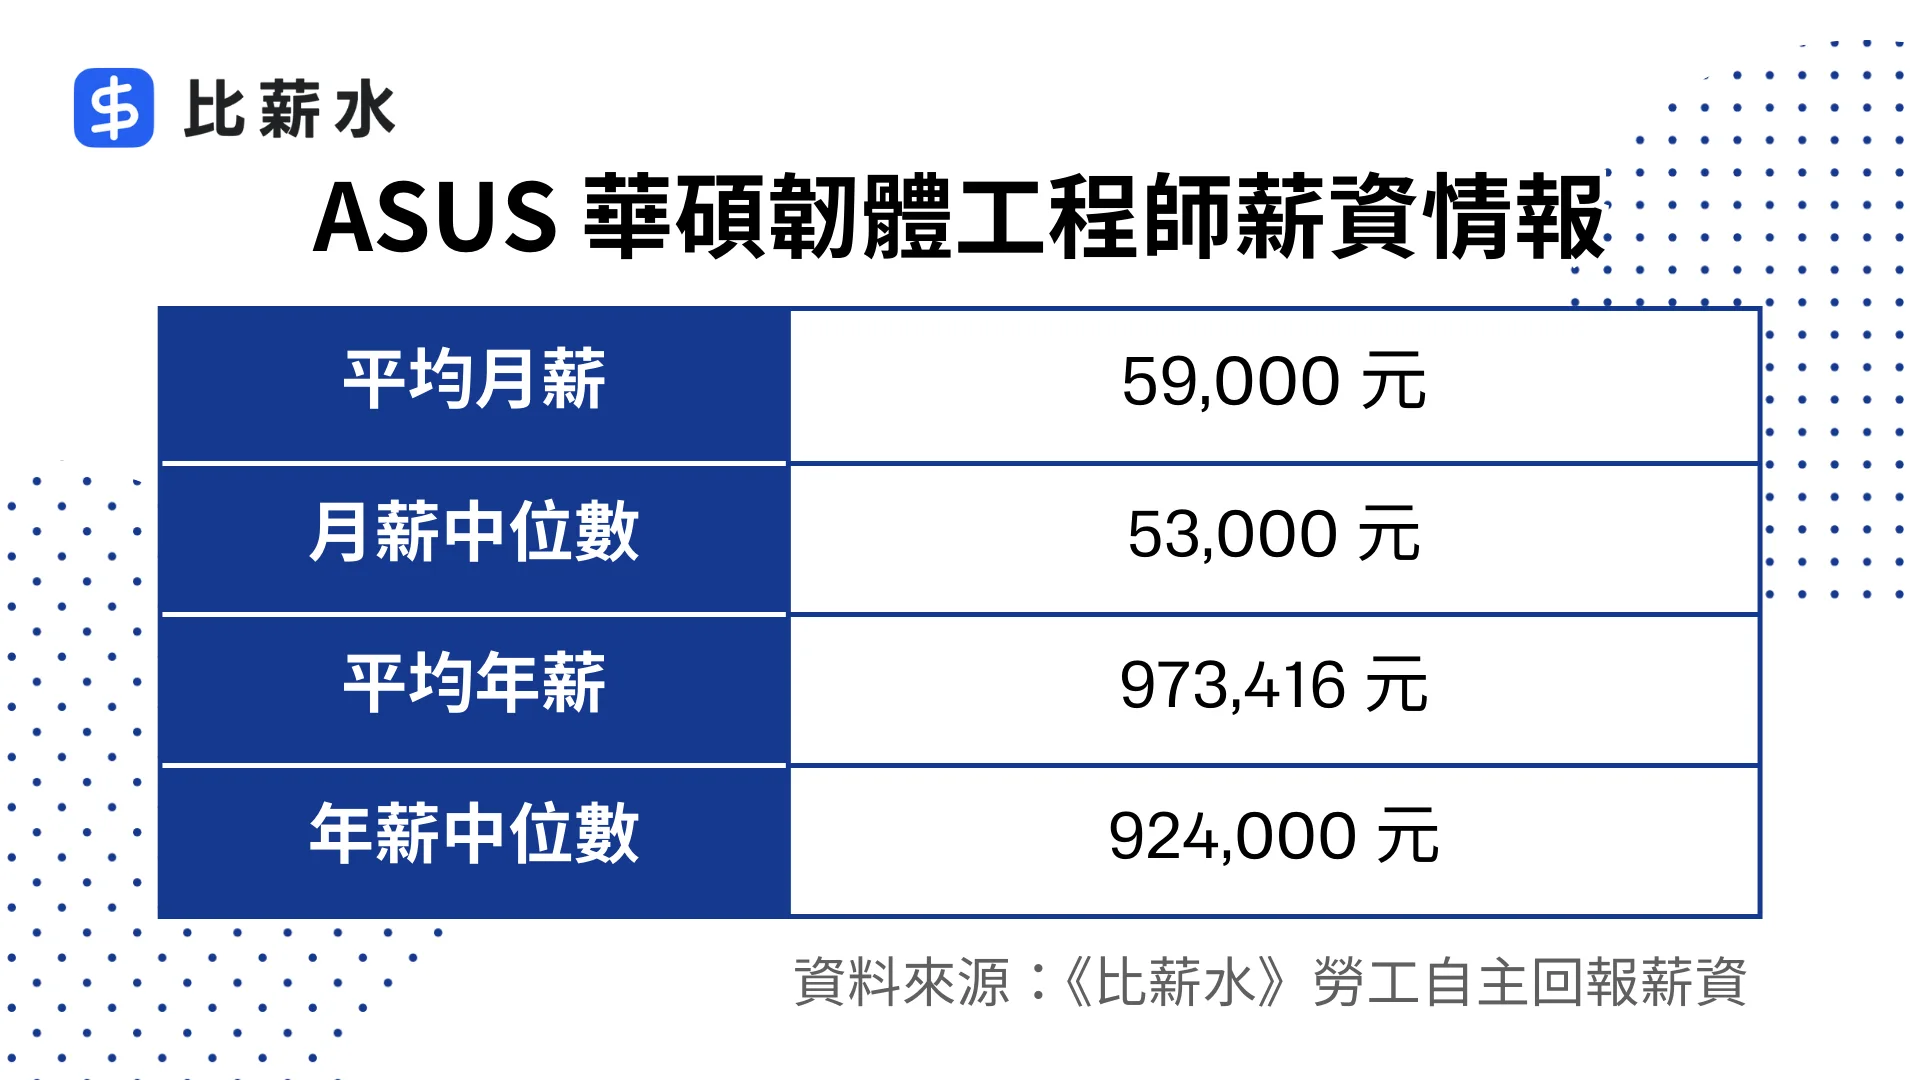 ASUS-華碩-韌體工程師-FW-薪水